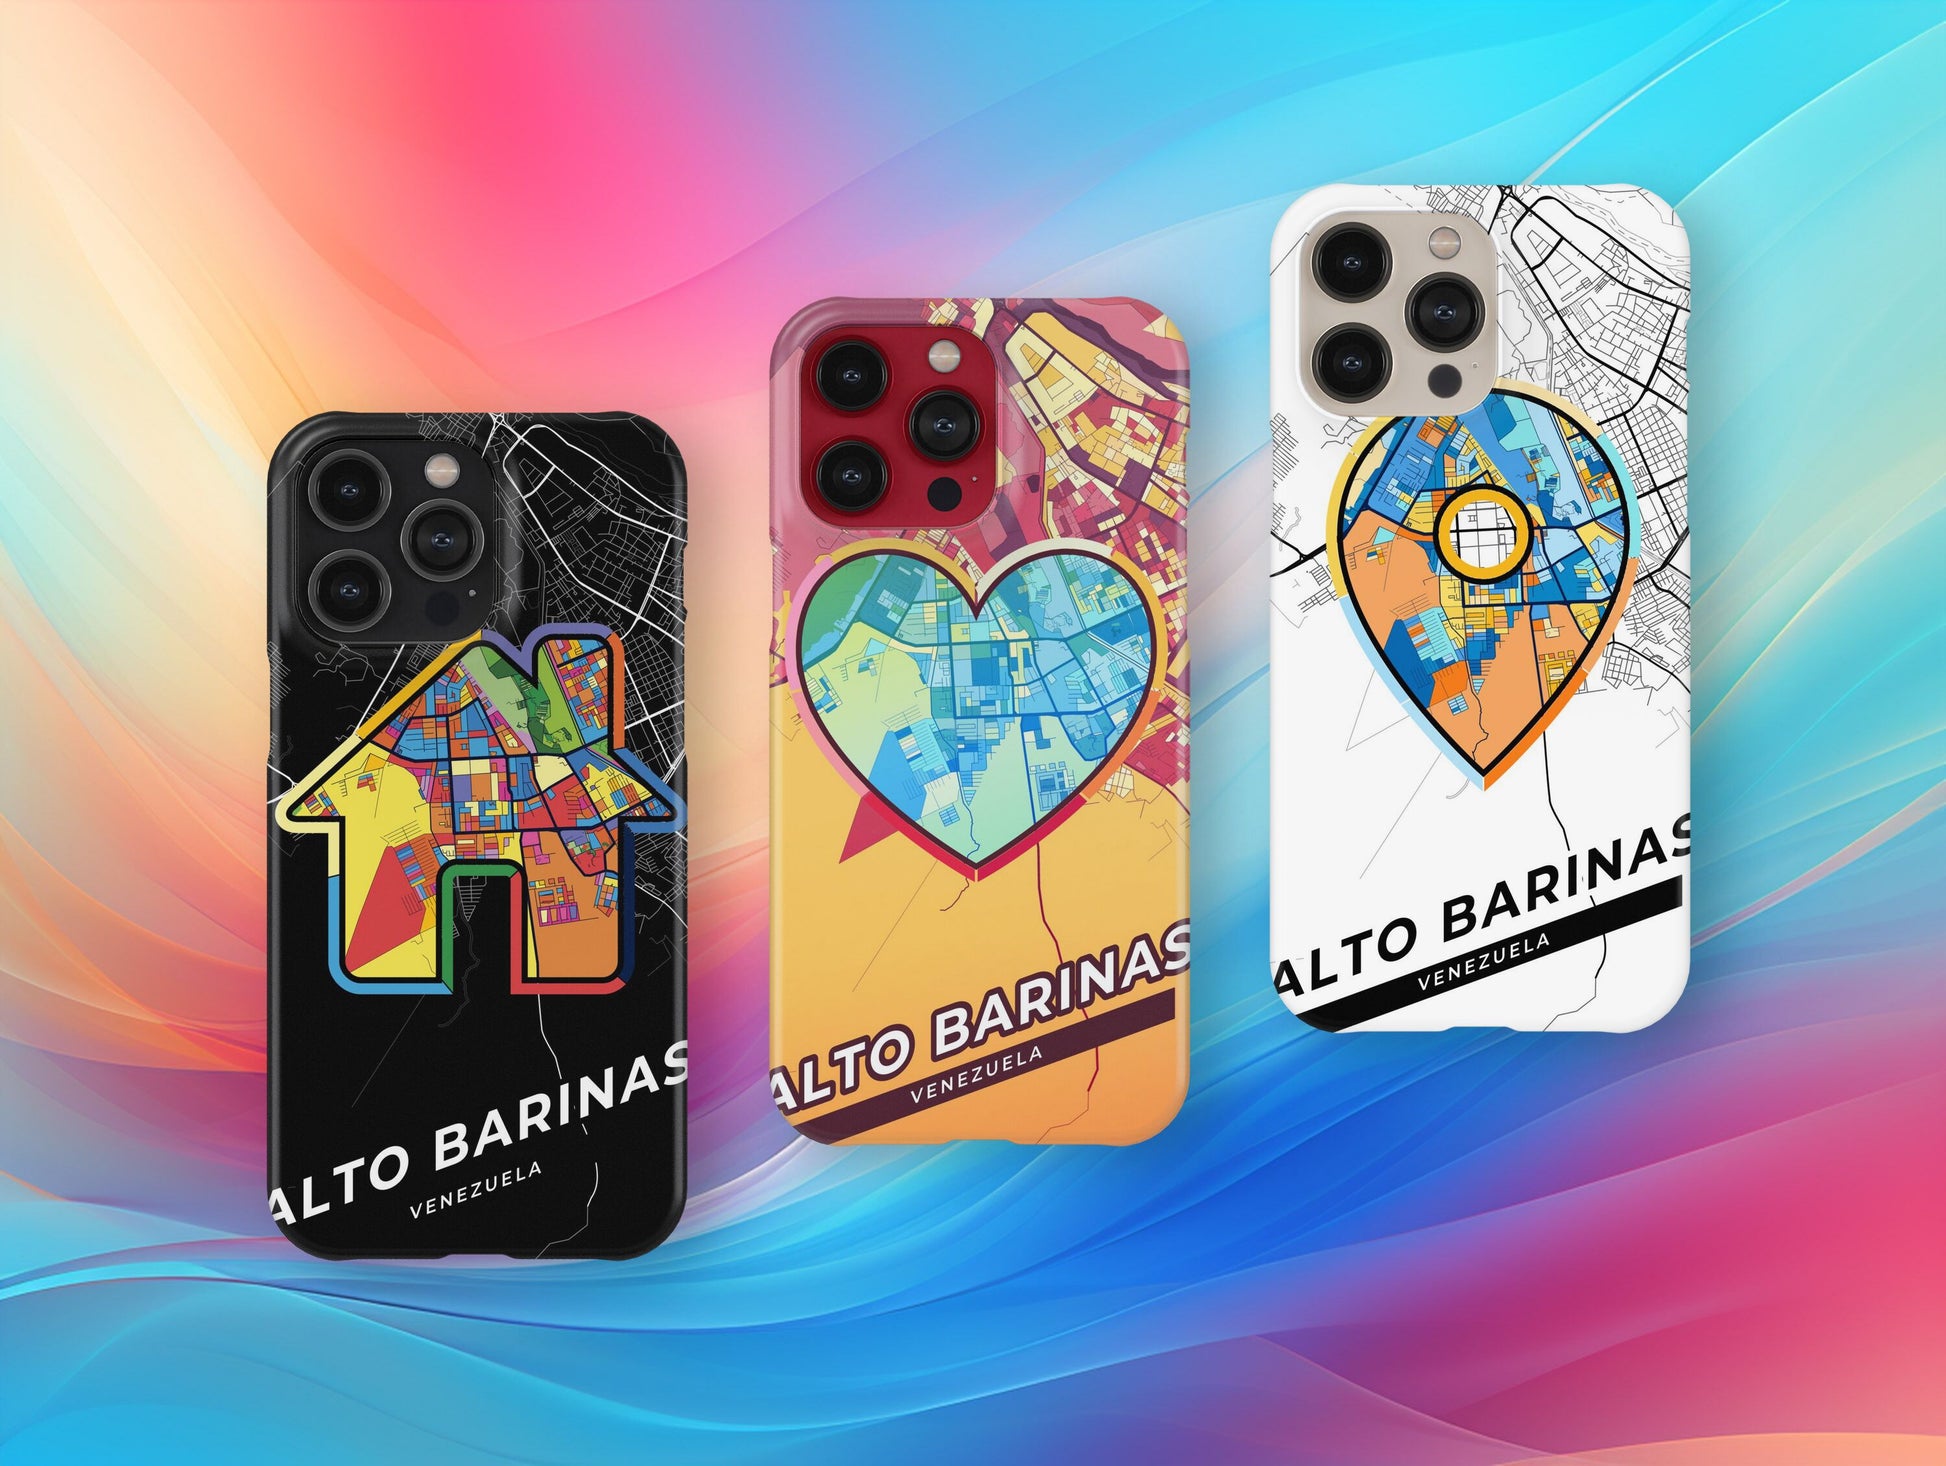 Alto Barinas Venezuela slim phone case with colorful icon. Birthday, wedding or housewarming gift. Couple match cases.